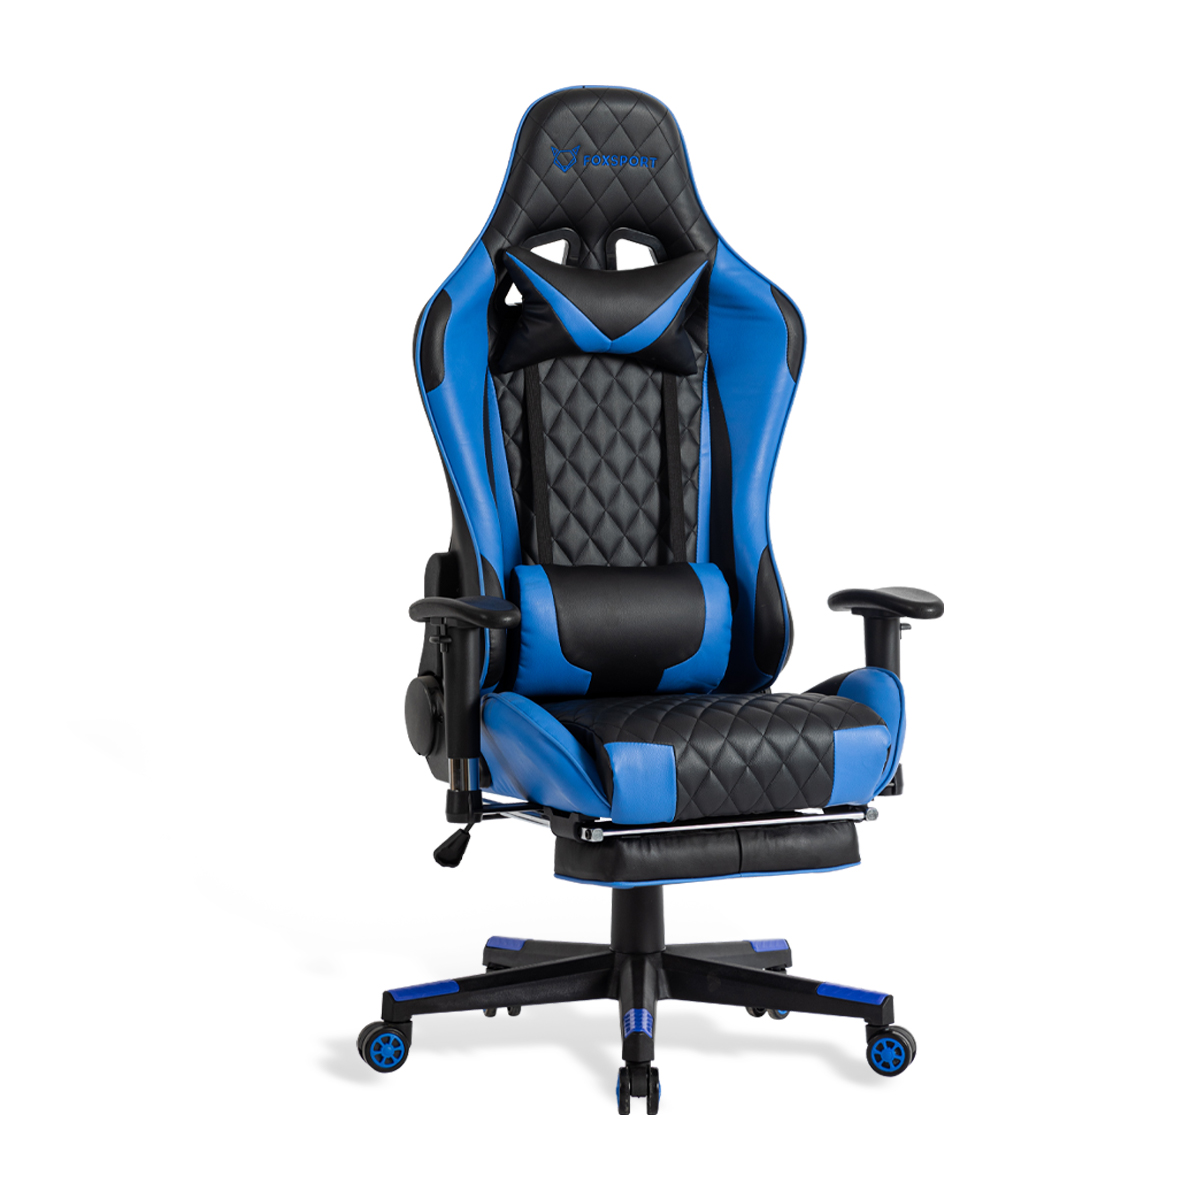 FOXSPORT Stuhl blau Blau Beinstütze Gaming-Stuhl, mit